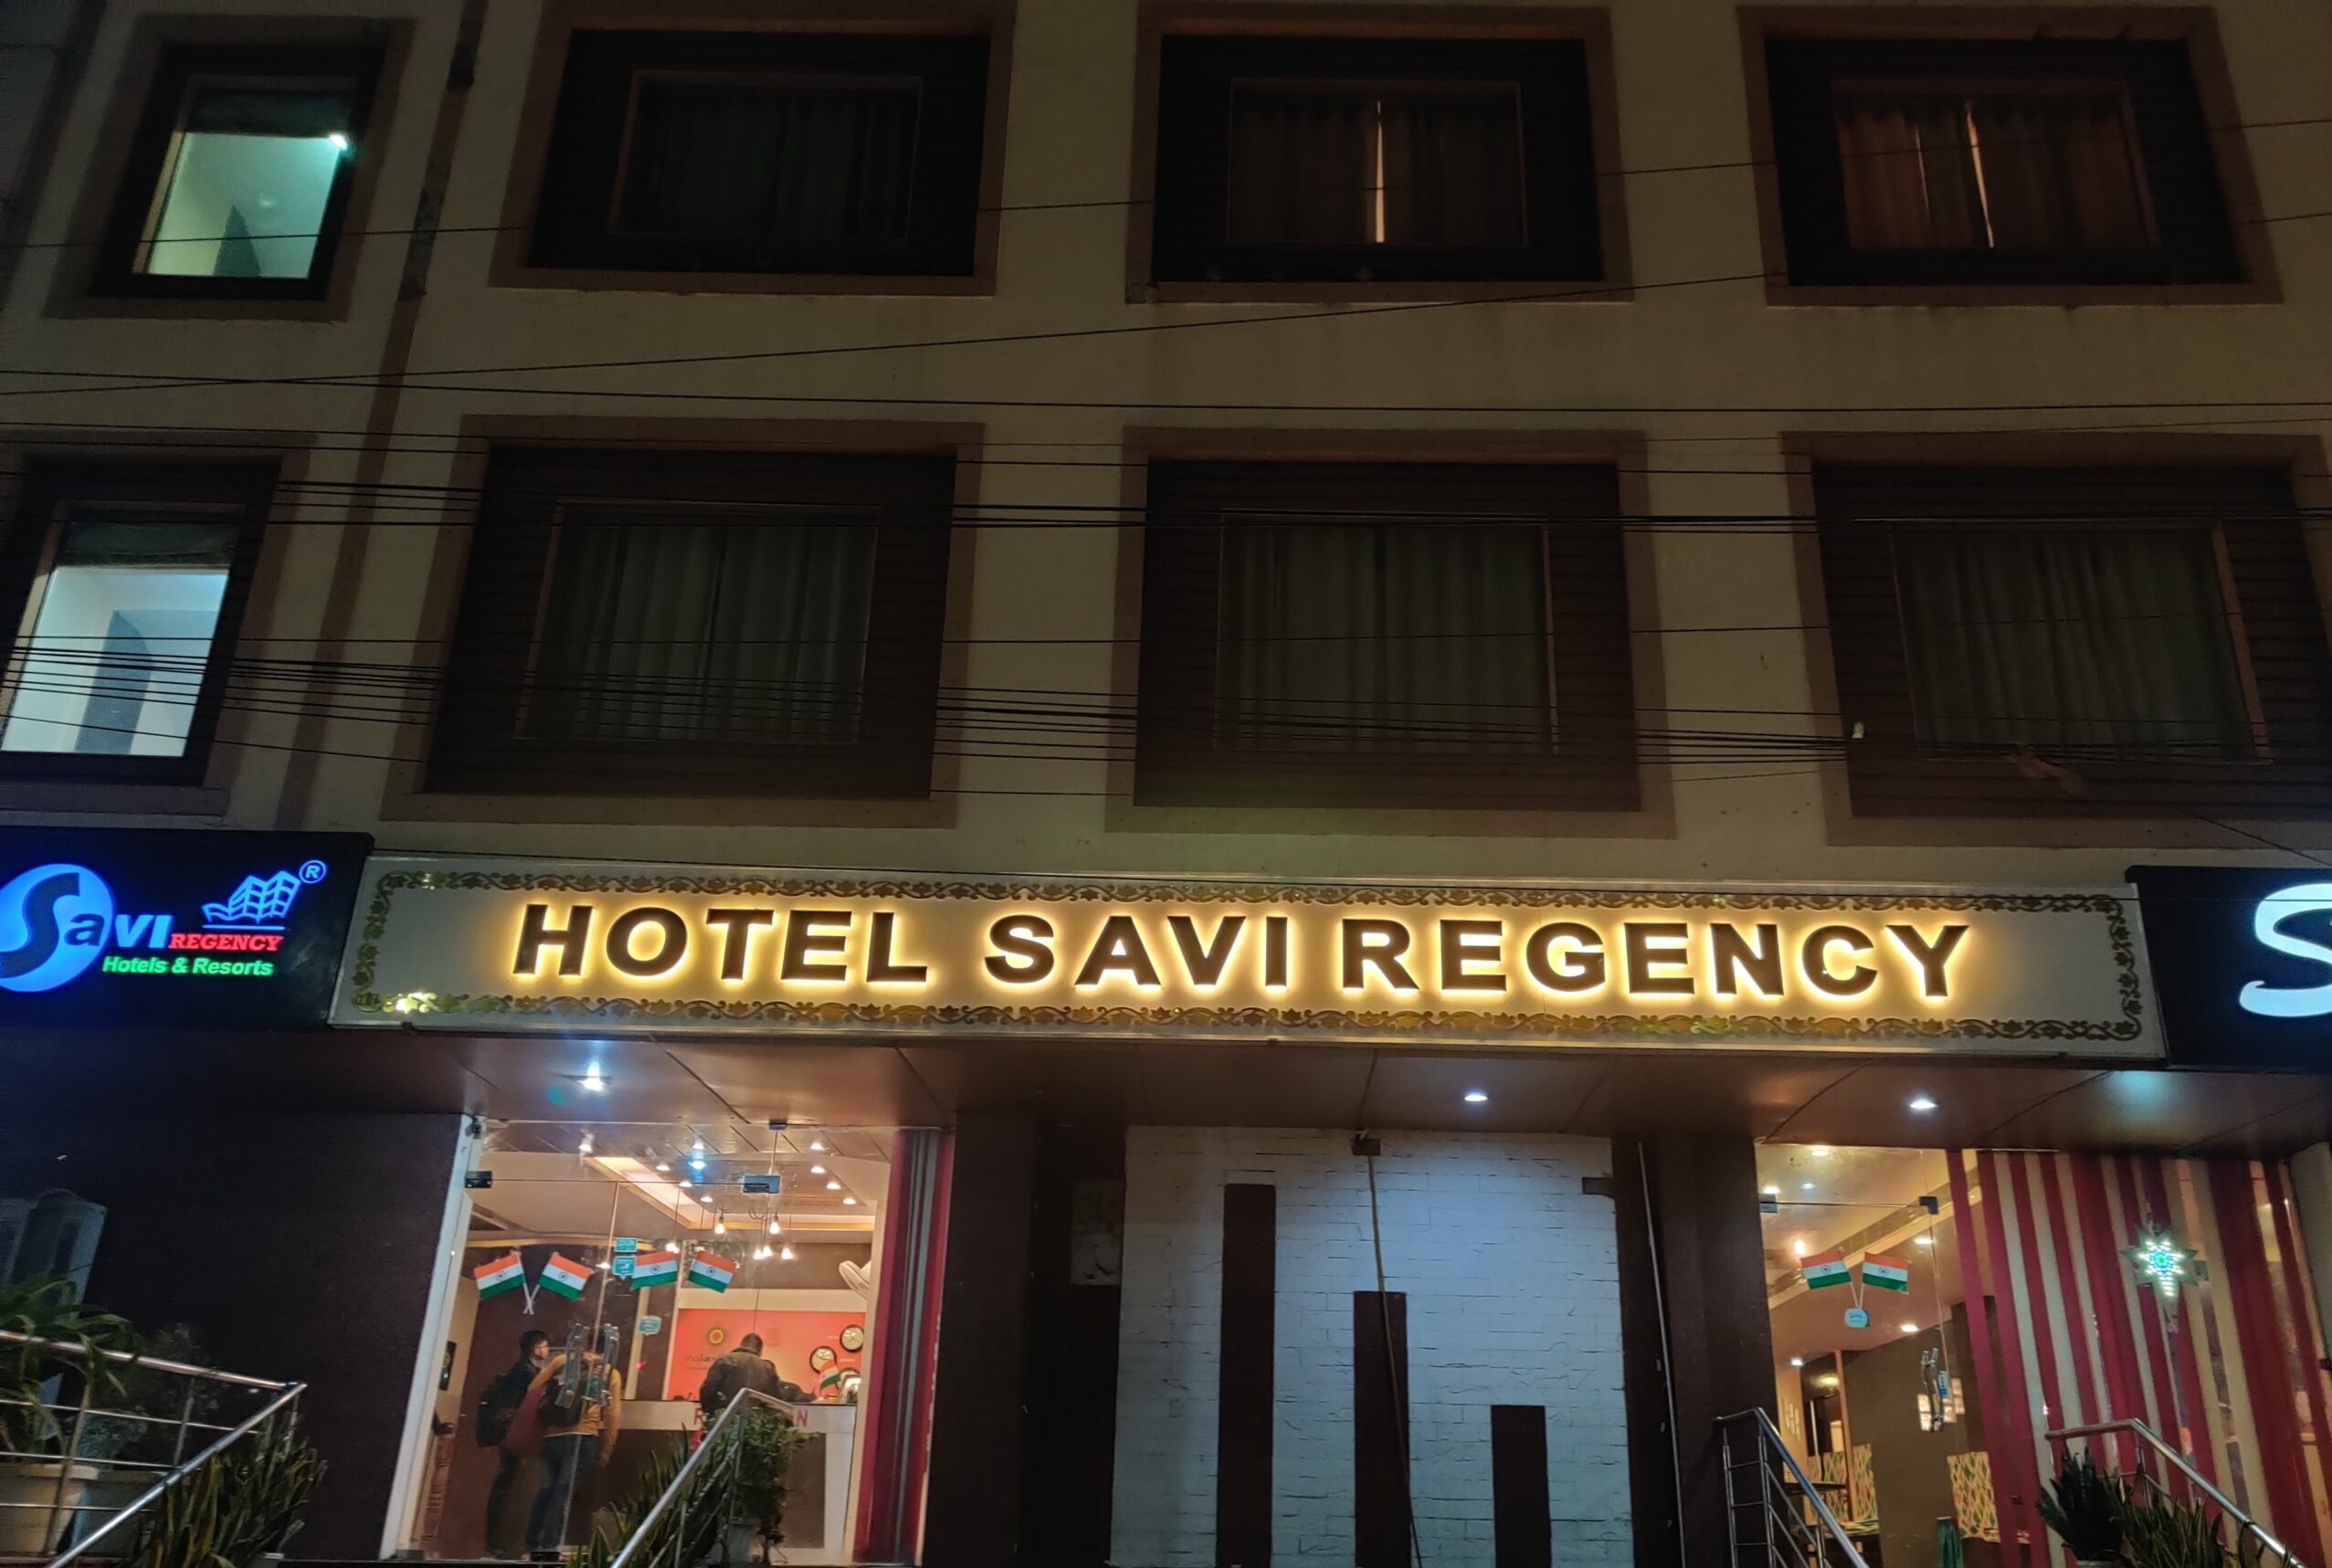 Hotel Savi Regency boutique hotel in Jaipur